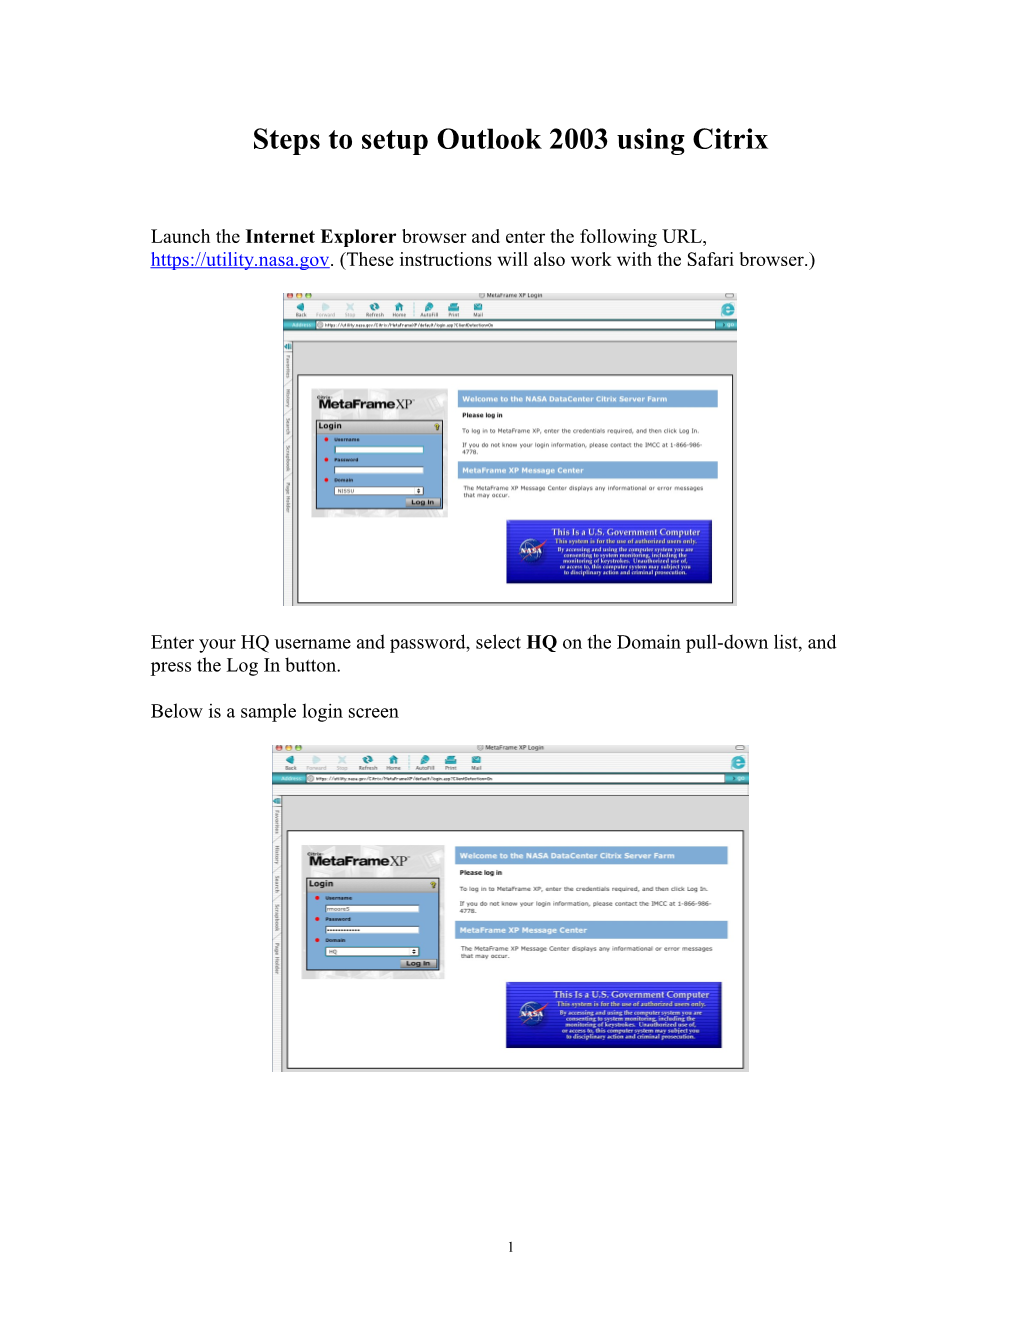 Steps to Setup Outlook 2003 Using Citrix